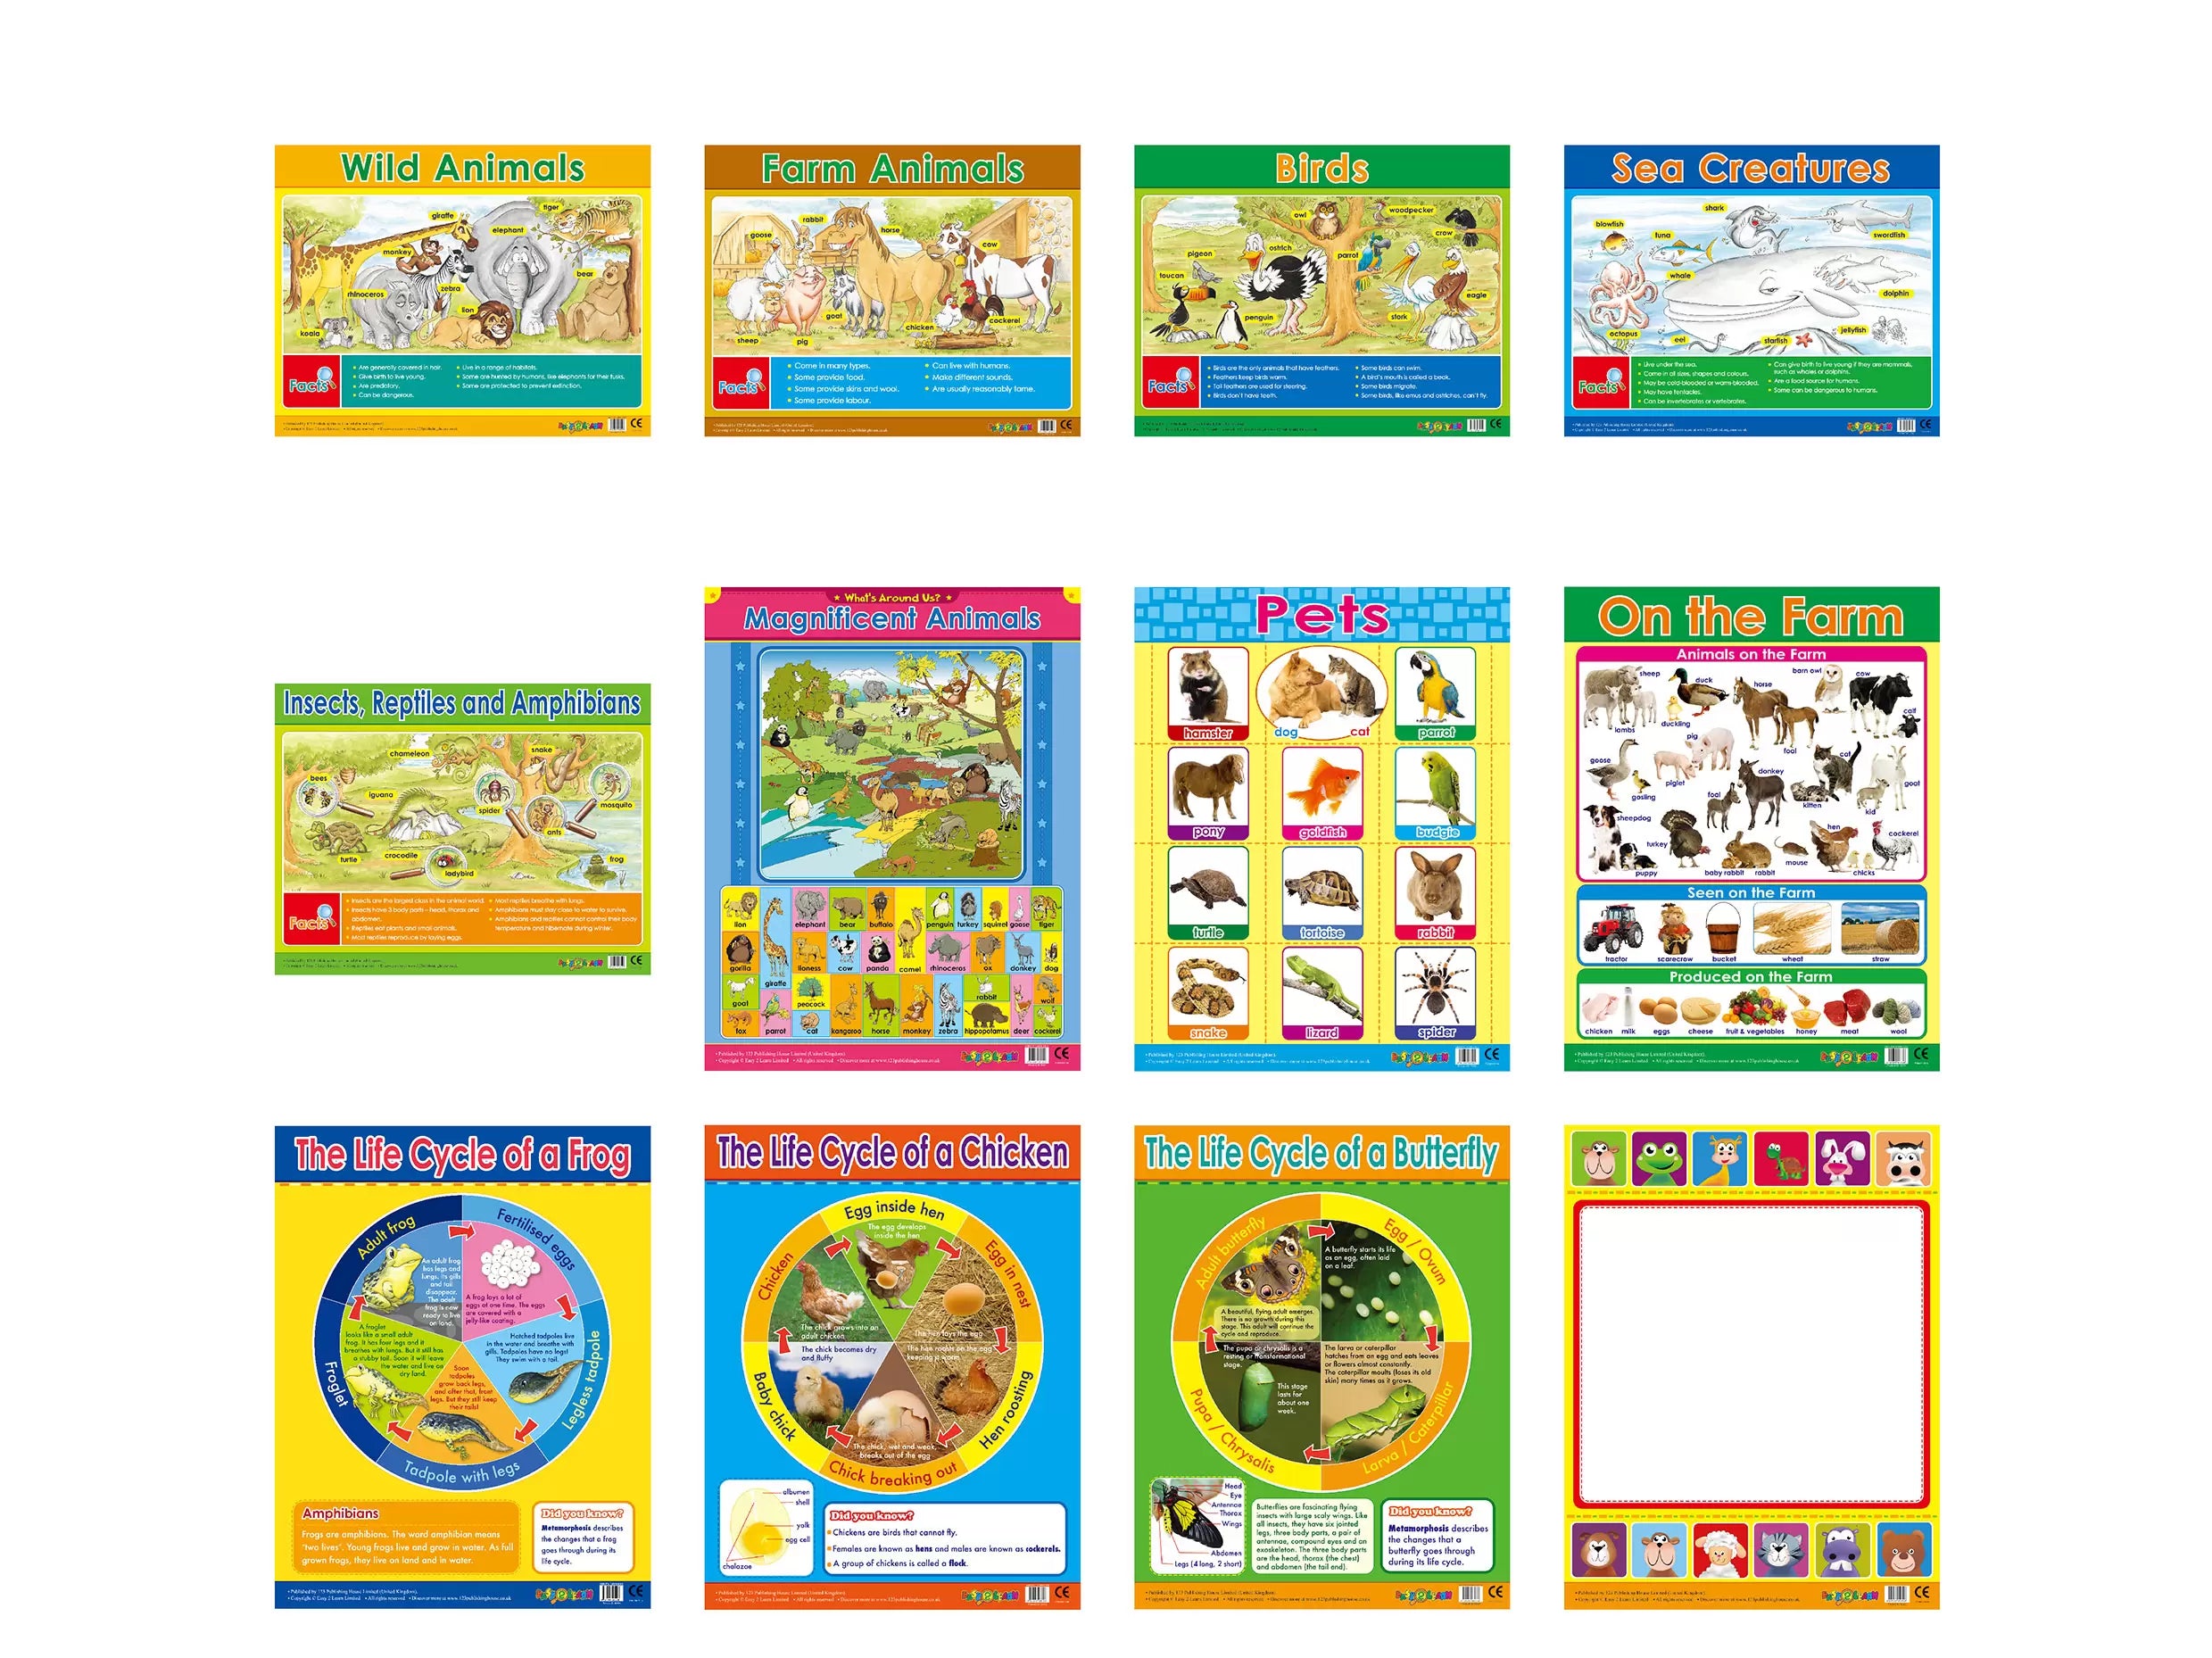 Animals & Life Cycles (12 Wall Charts) - Educational Wall Chart Pack in English